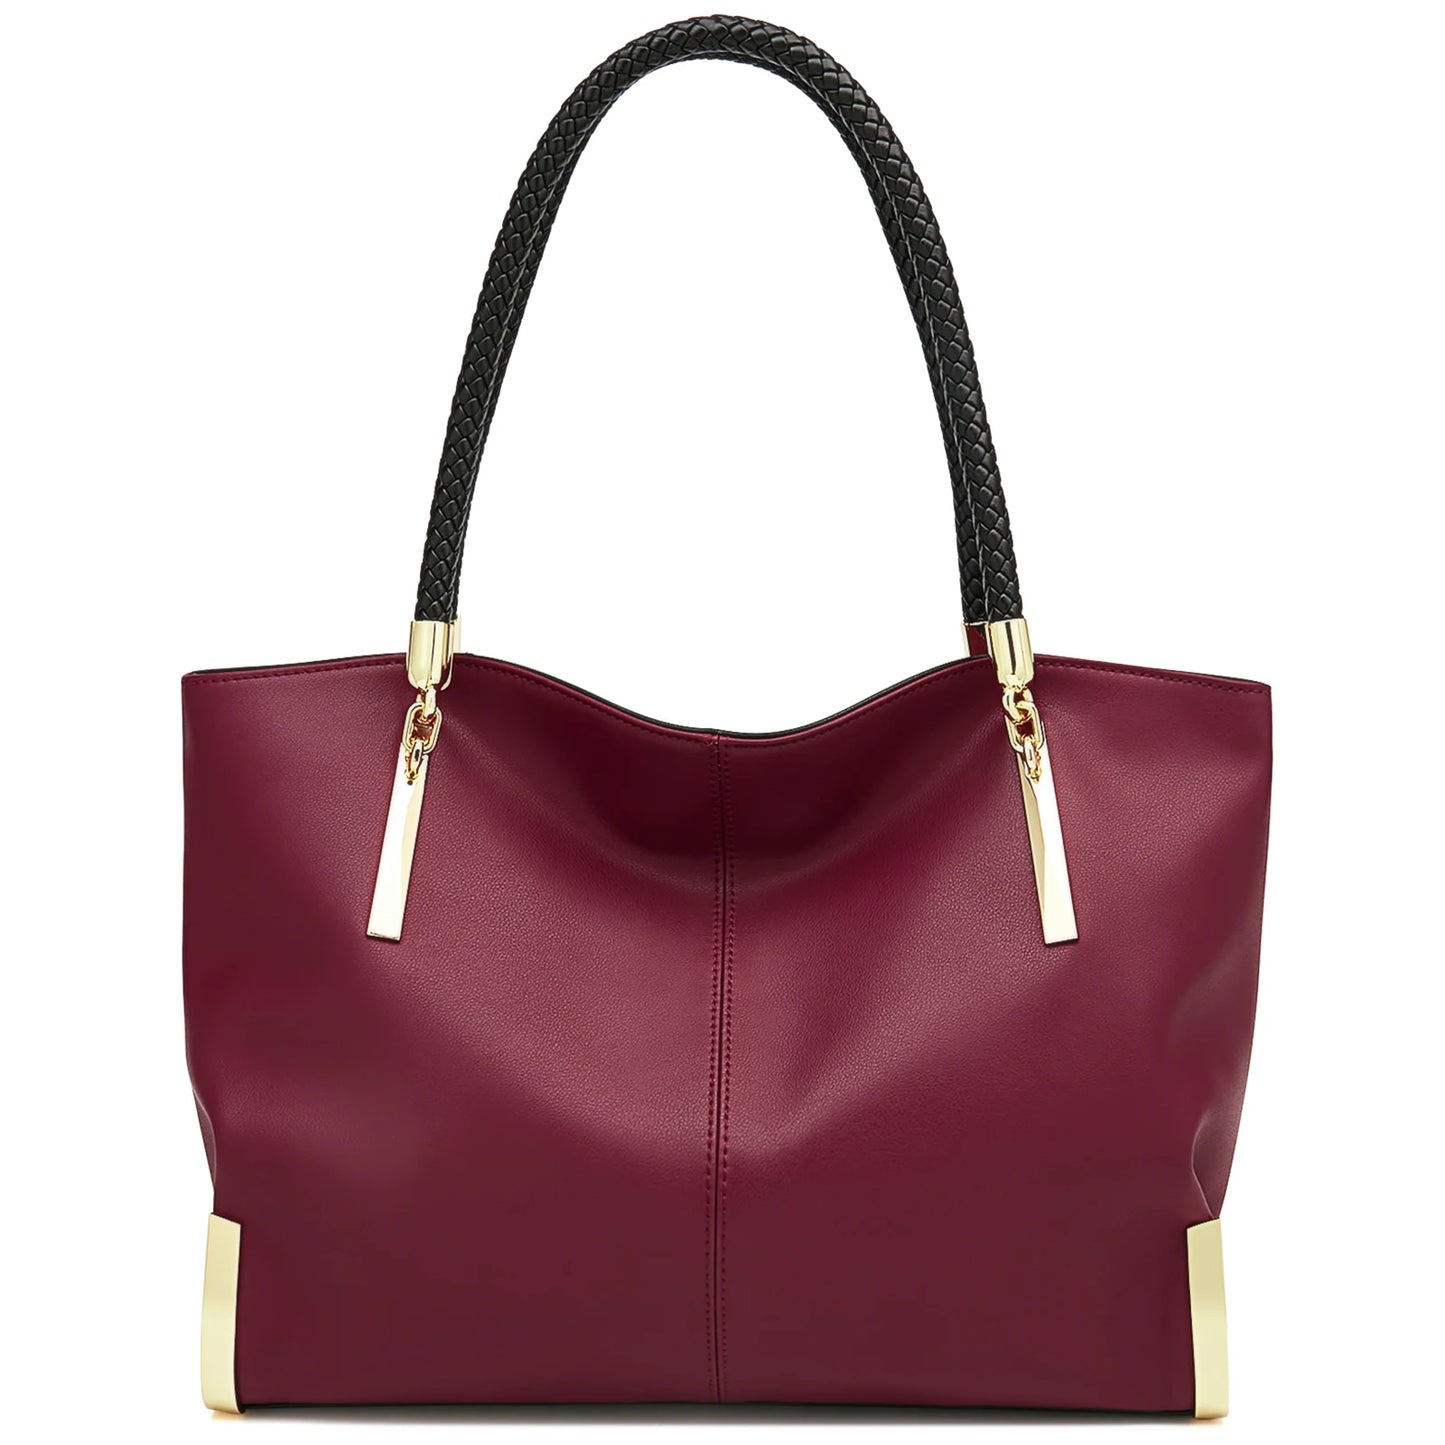 FOXER Brand Stylish Women Cowhide Leather Handbag Red wine1